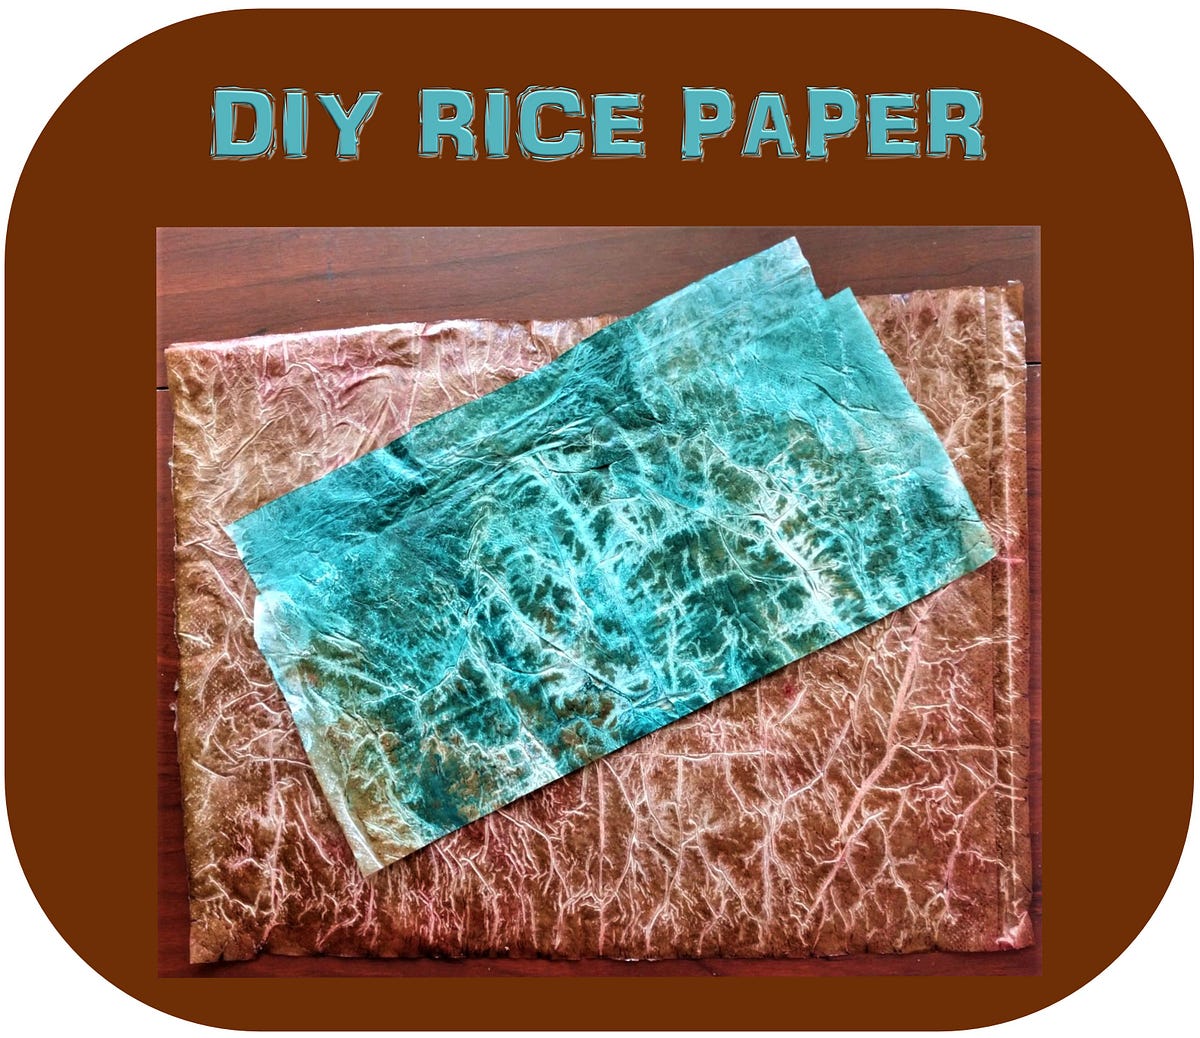 My Crafty Life Blog - Crafty Rice